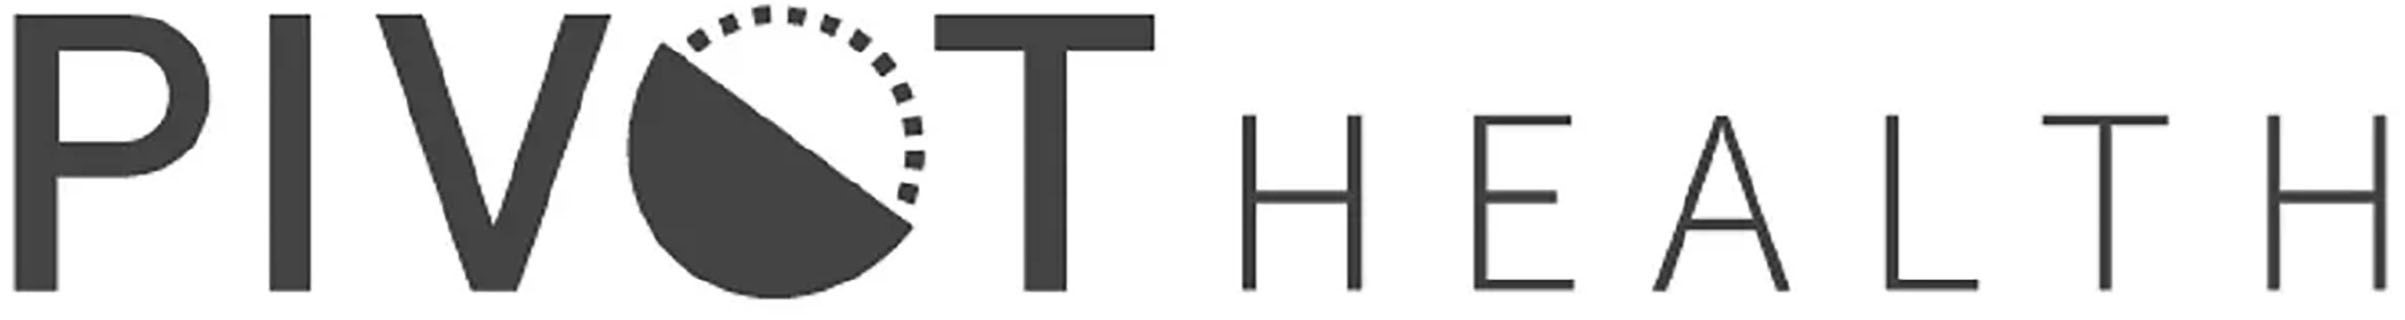 Pivot Health logo